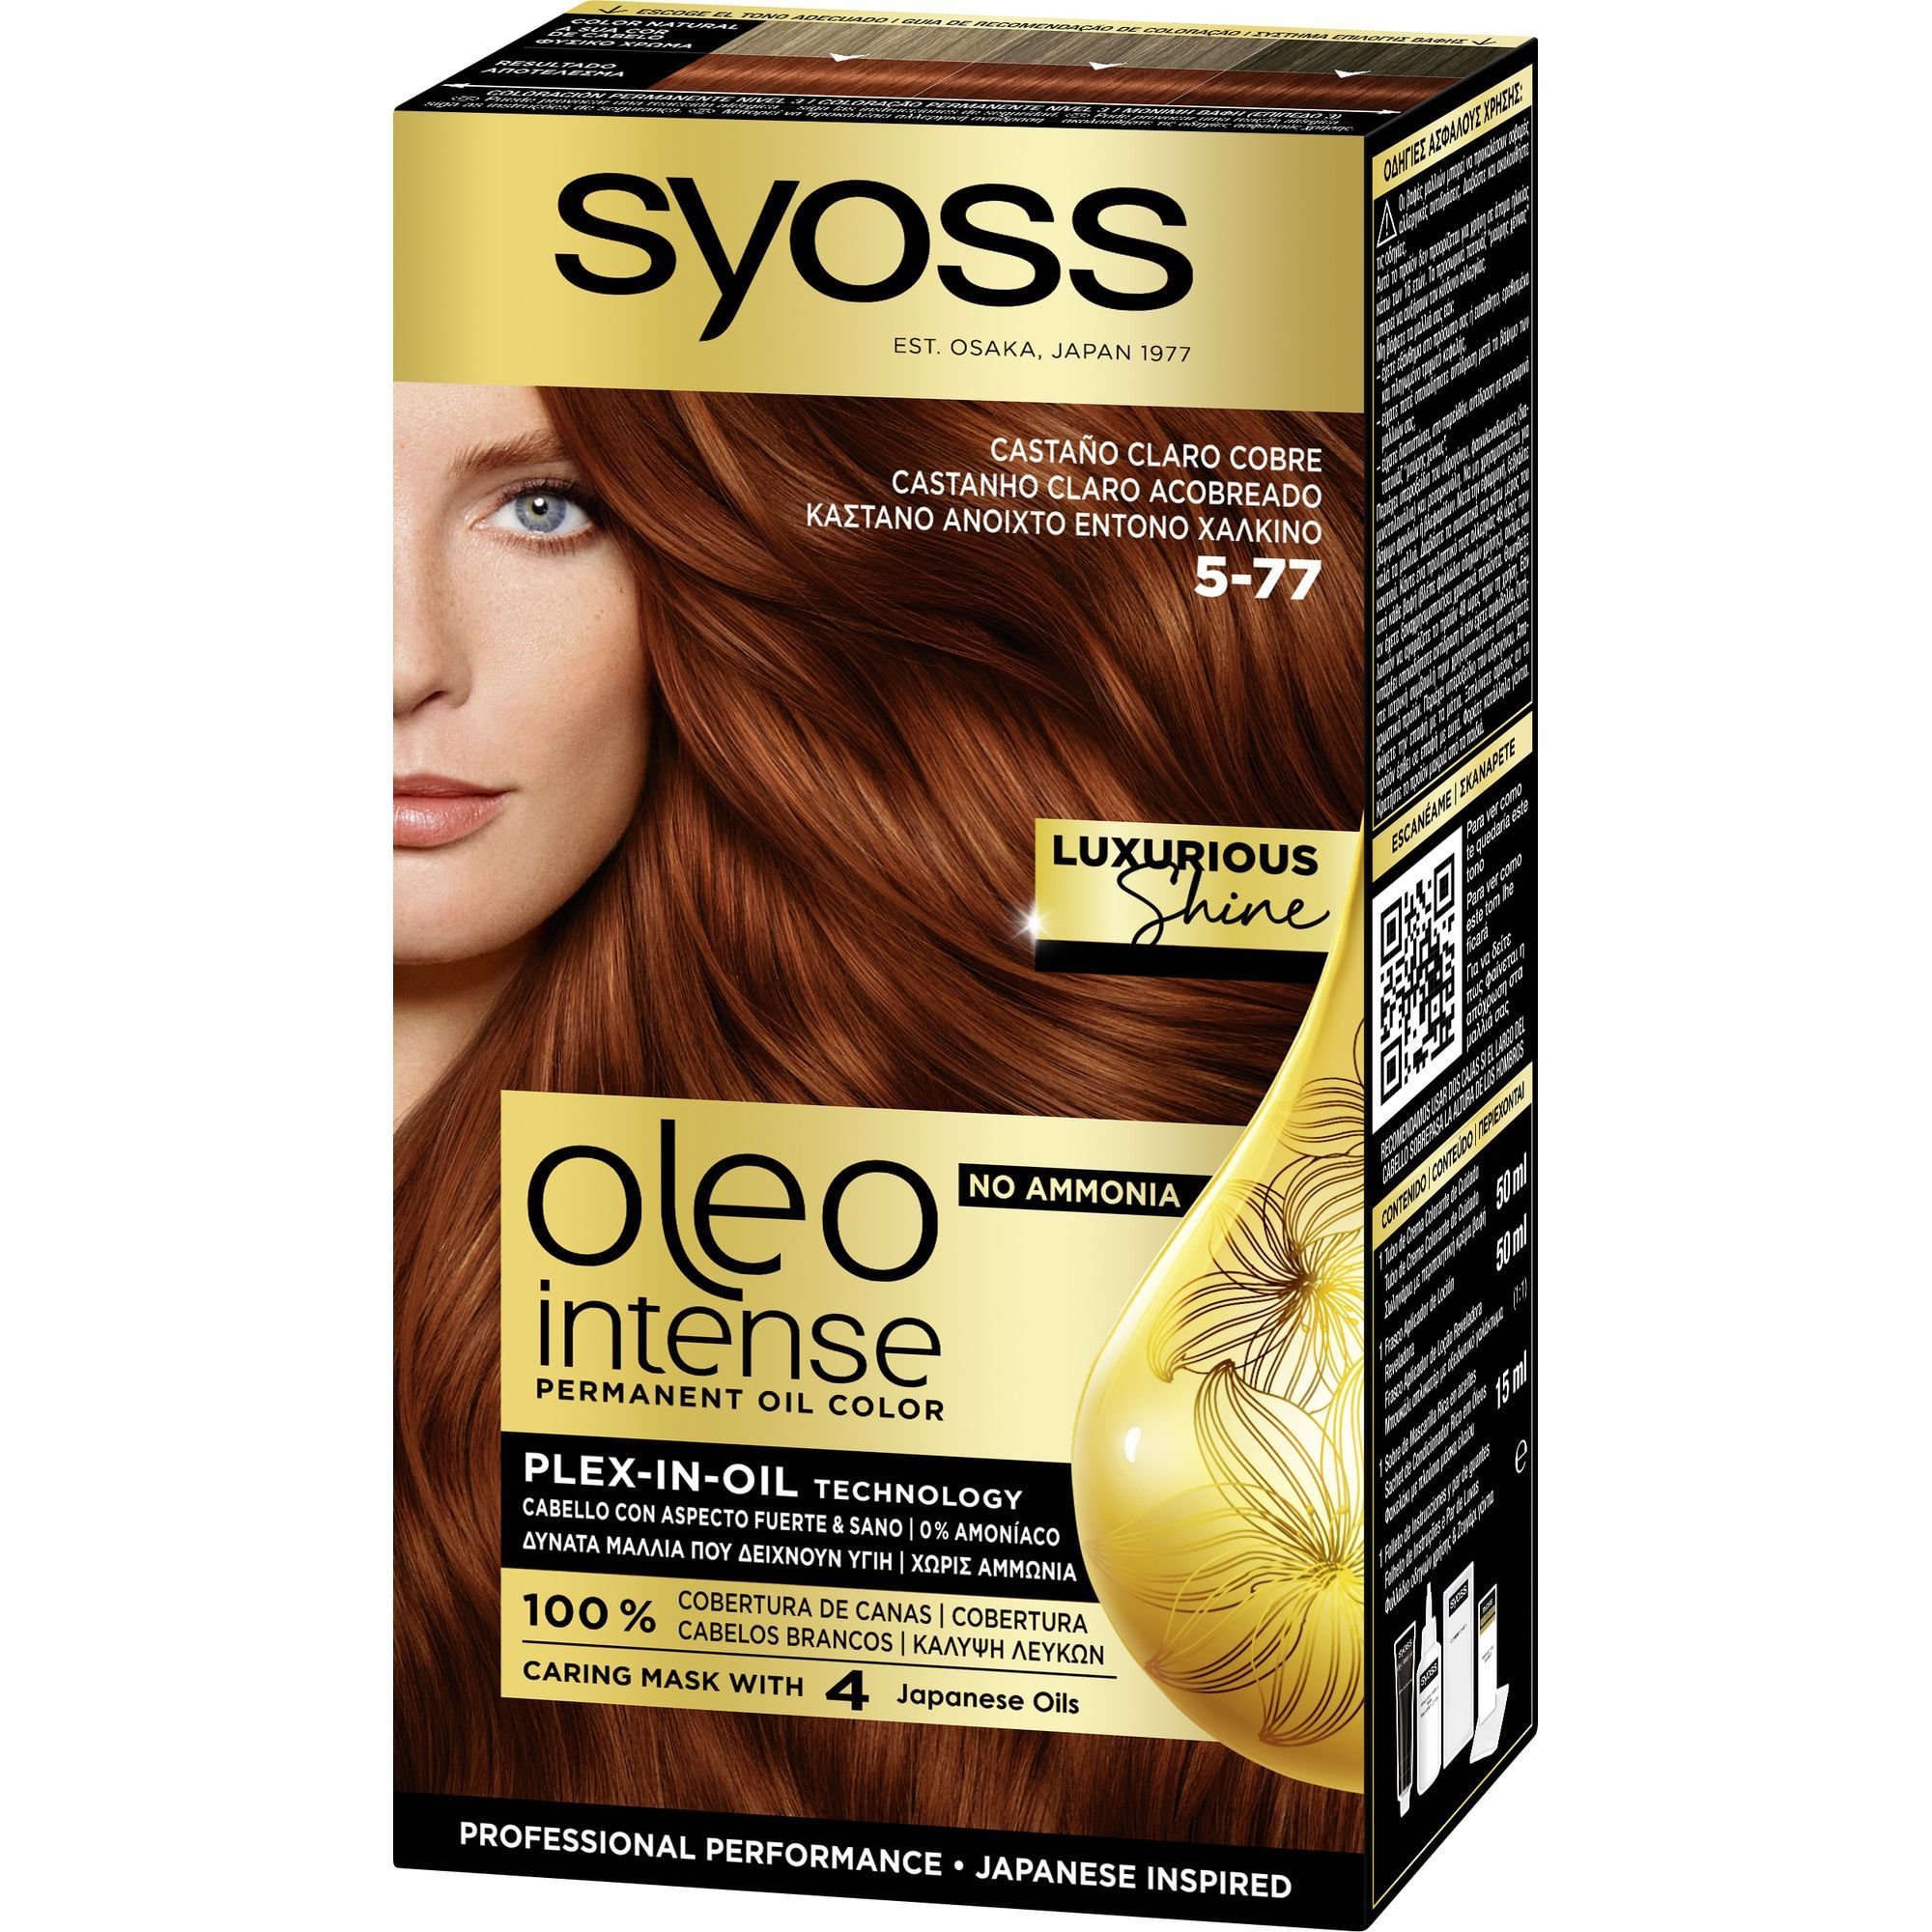 Syoss Syoss Oleo Intense Permanent Oil Hair Color Kit Επαγγελματική Μόνιμη Βαφή Μαλλιών για Εξαιρετική Κάλυψη & Έντονο Χρώμα που Διαρκεί, Χωρίς Αμμωνία 1 Τεμάχιο - 5-77 Καστανό Ανοιχτό Έντονο Χάλκινο